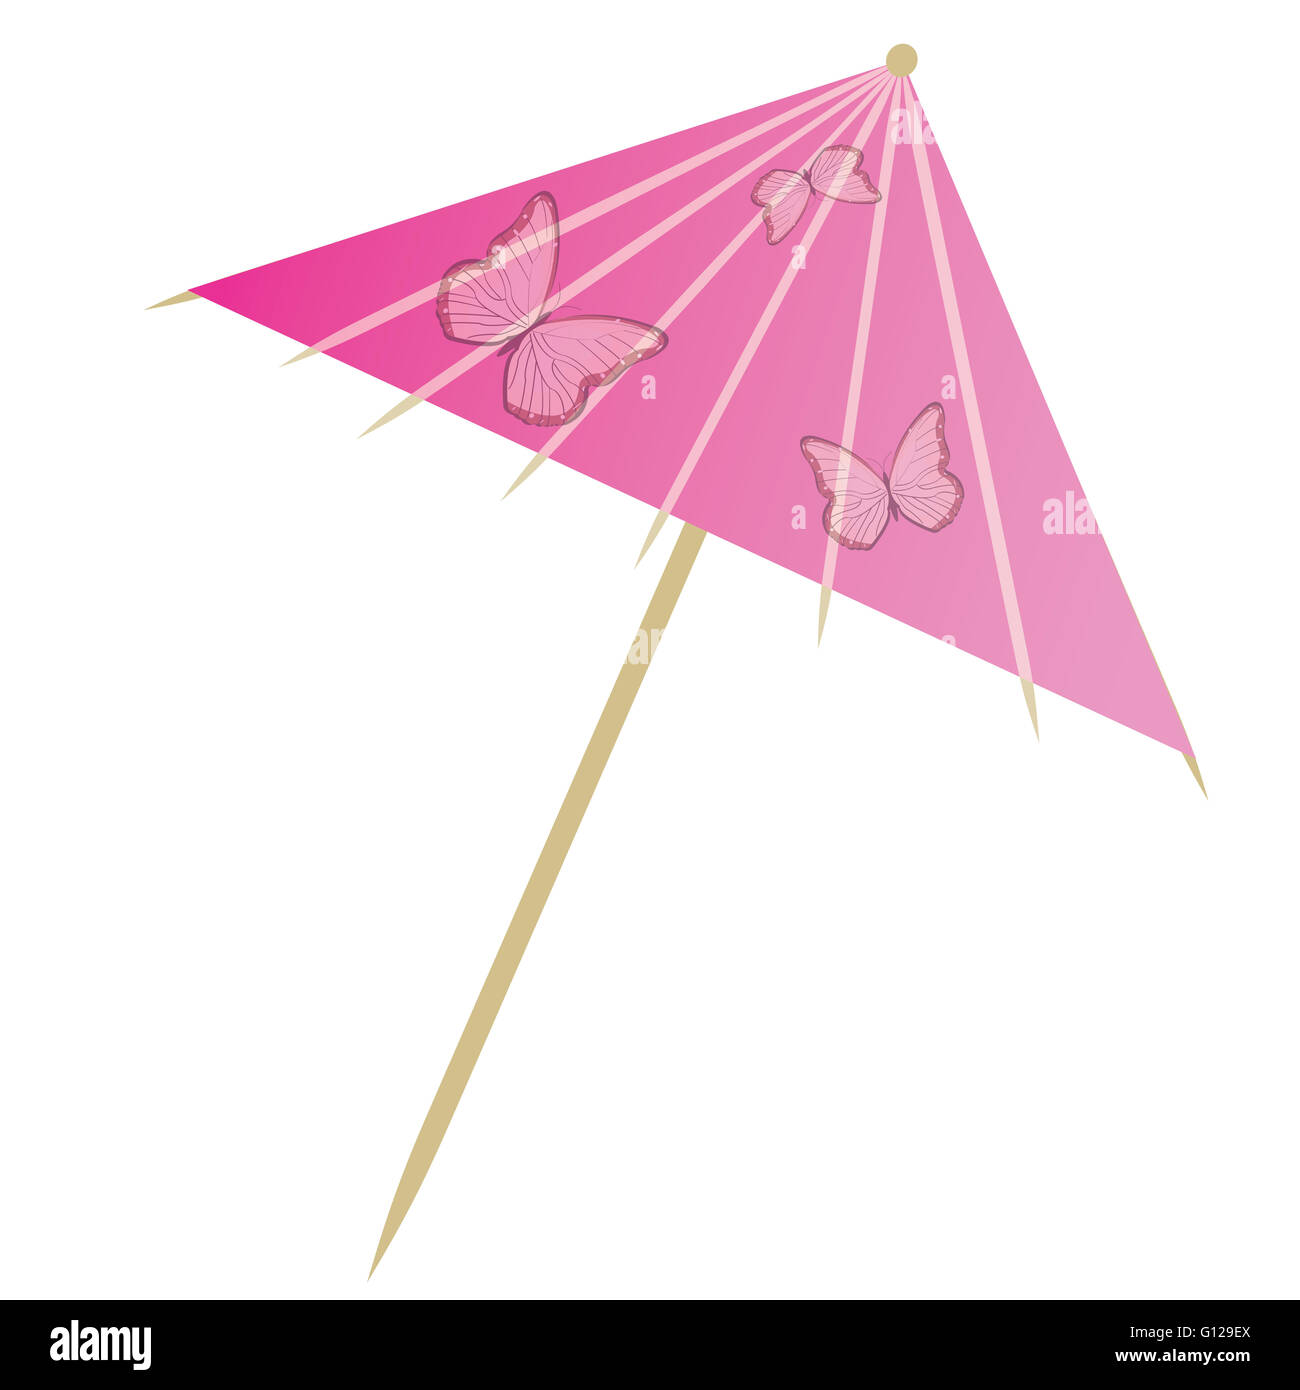 Cocktail umbrella isolated on white background, vector illustration Stock Photo